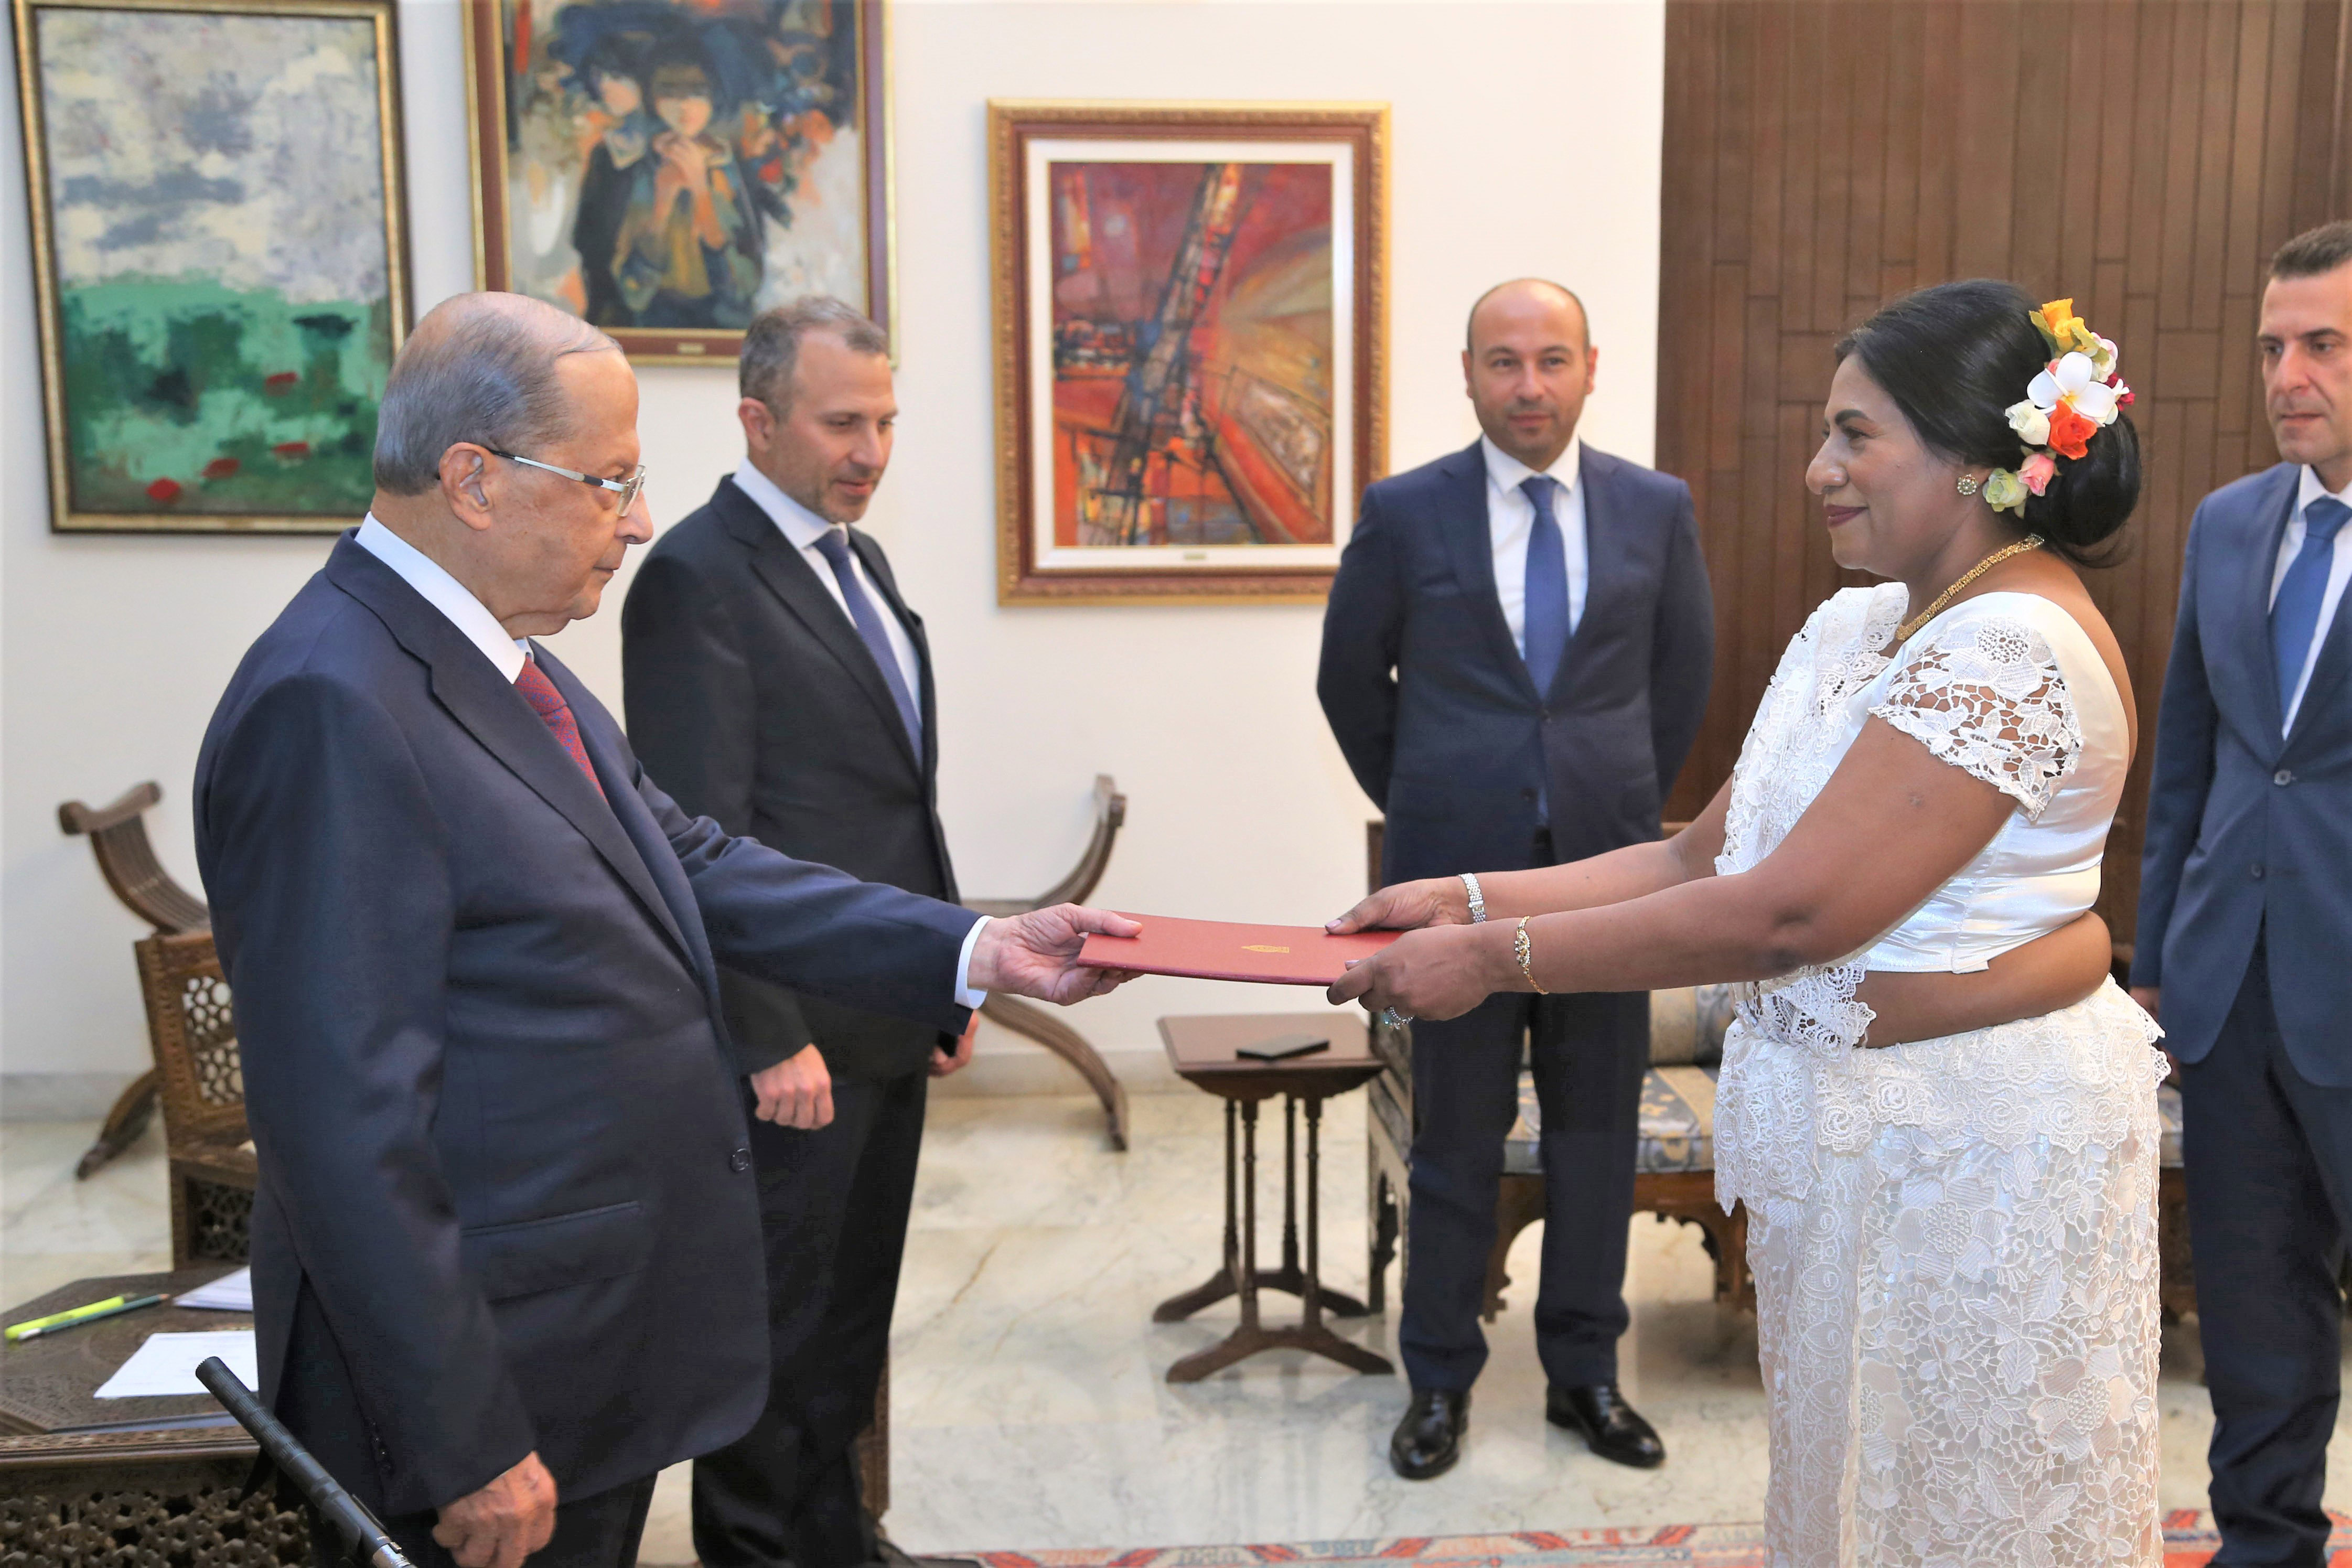 Ambassador Shani Calyaneratne Karunaratne presented Letters of Credence to the President of the Republic of Lebanon